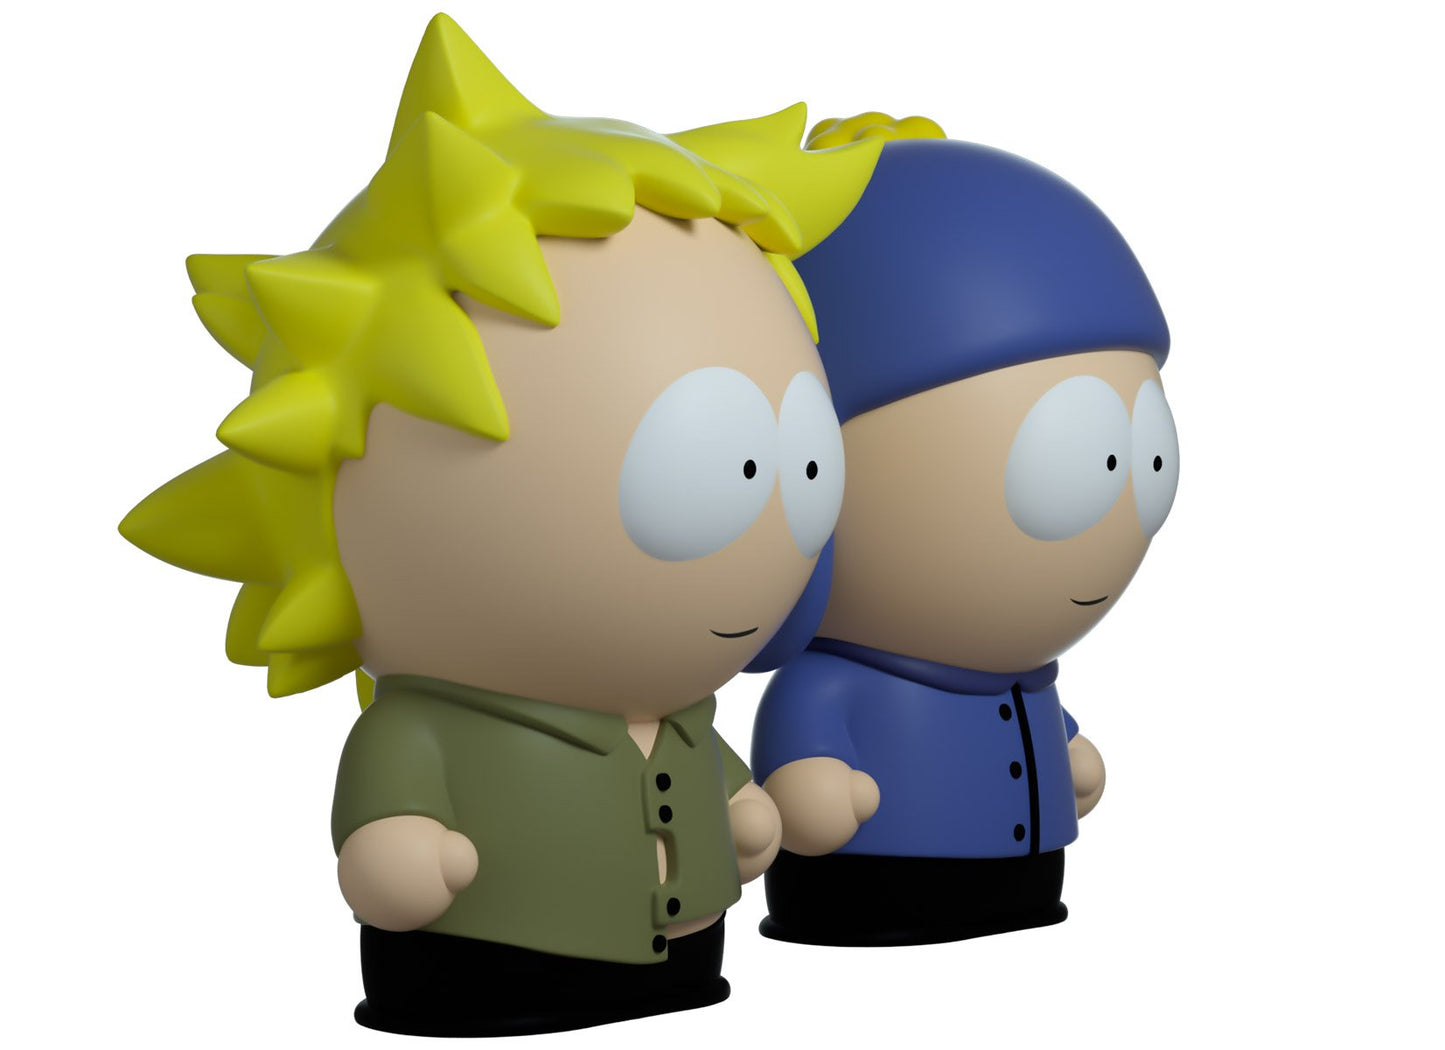 South Park Vinyl figurine Tweek & Craig Youtooz